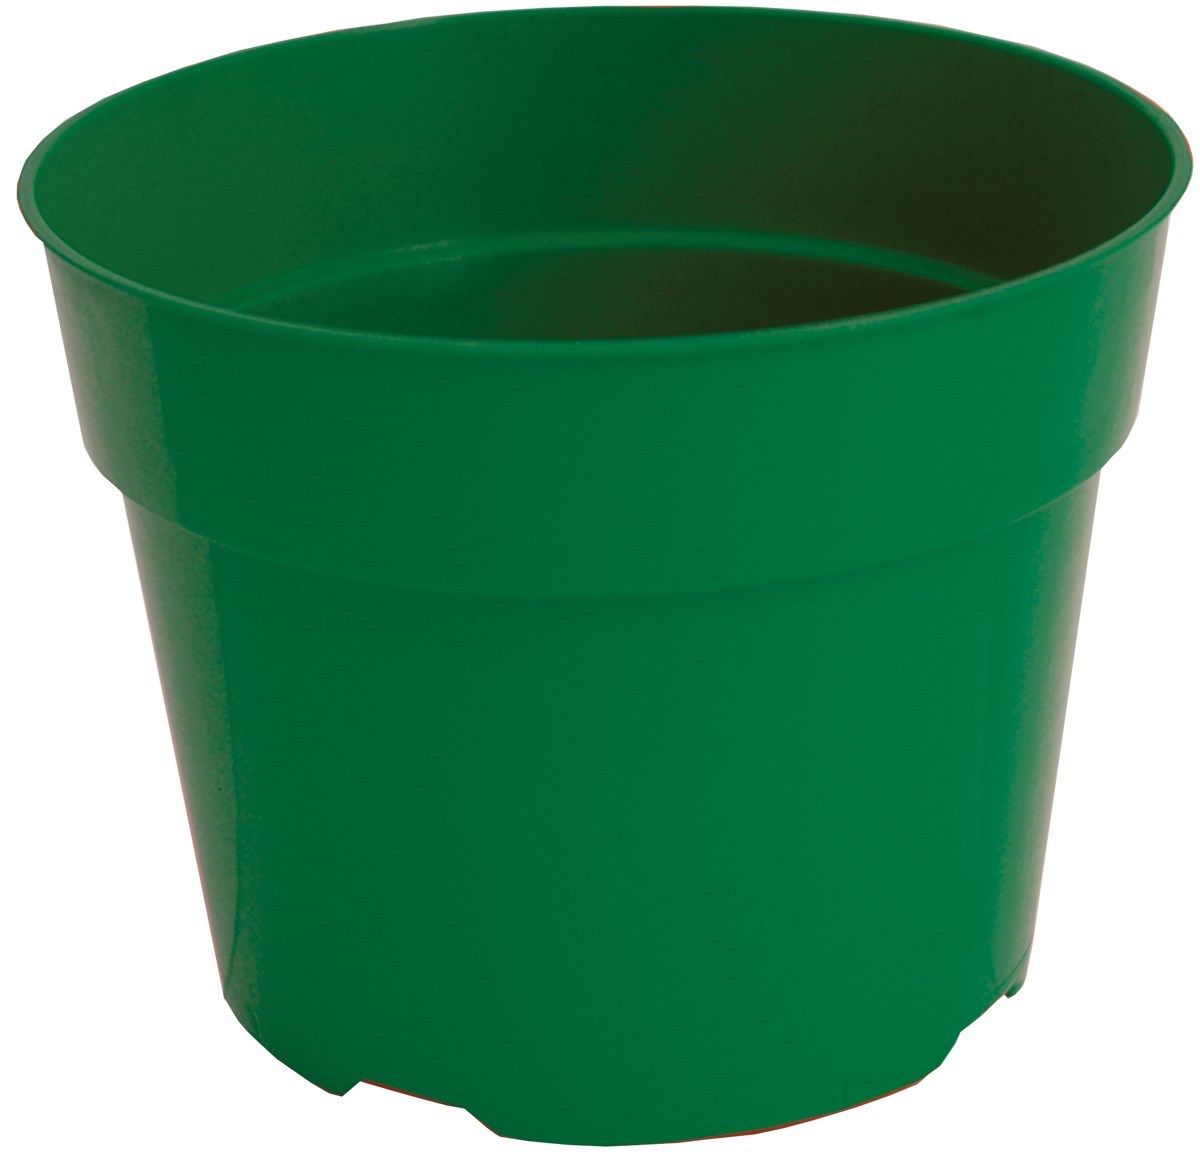 8 In. Pot Grower Round, Green